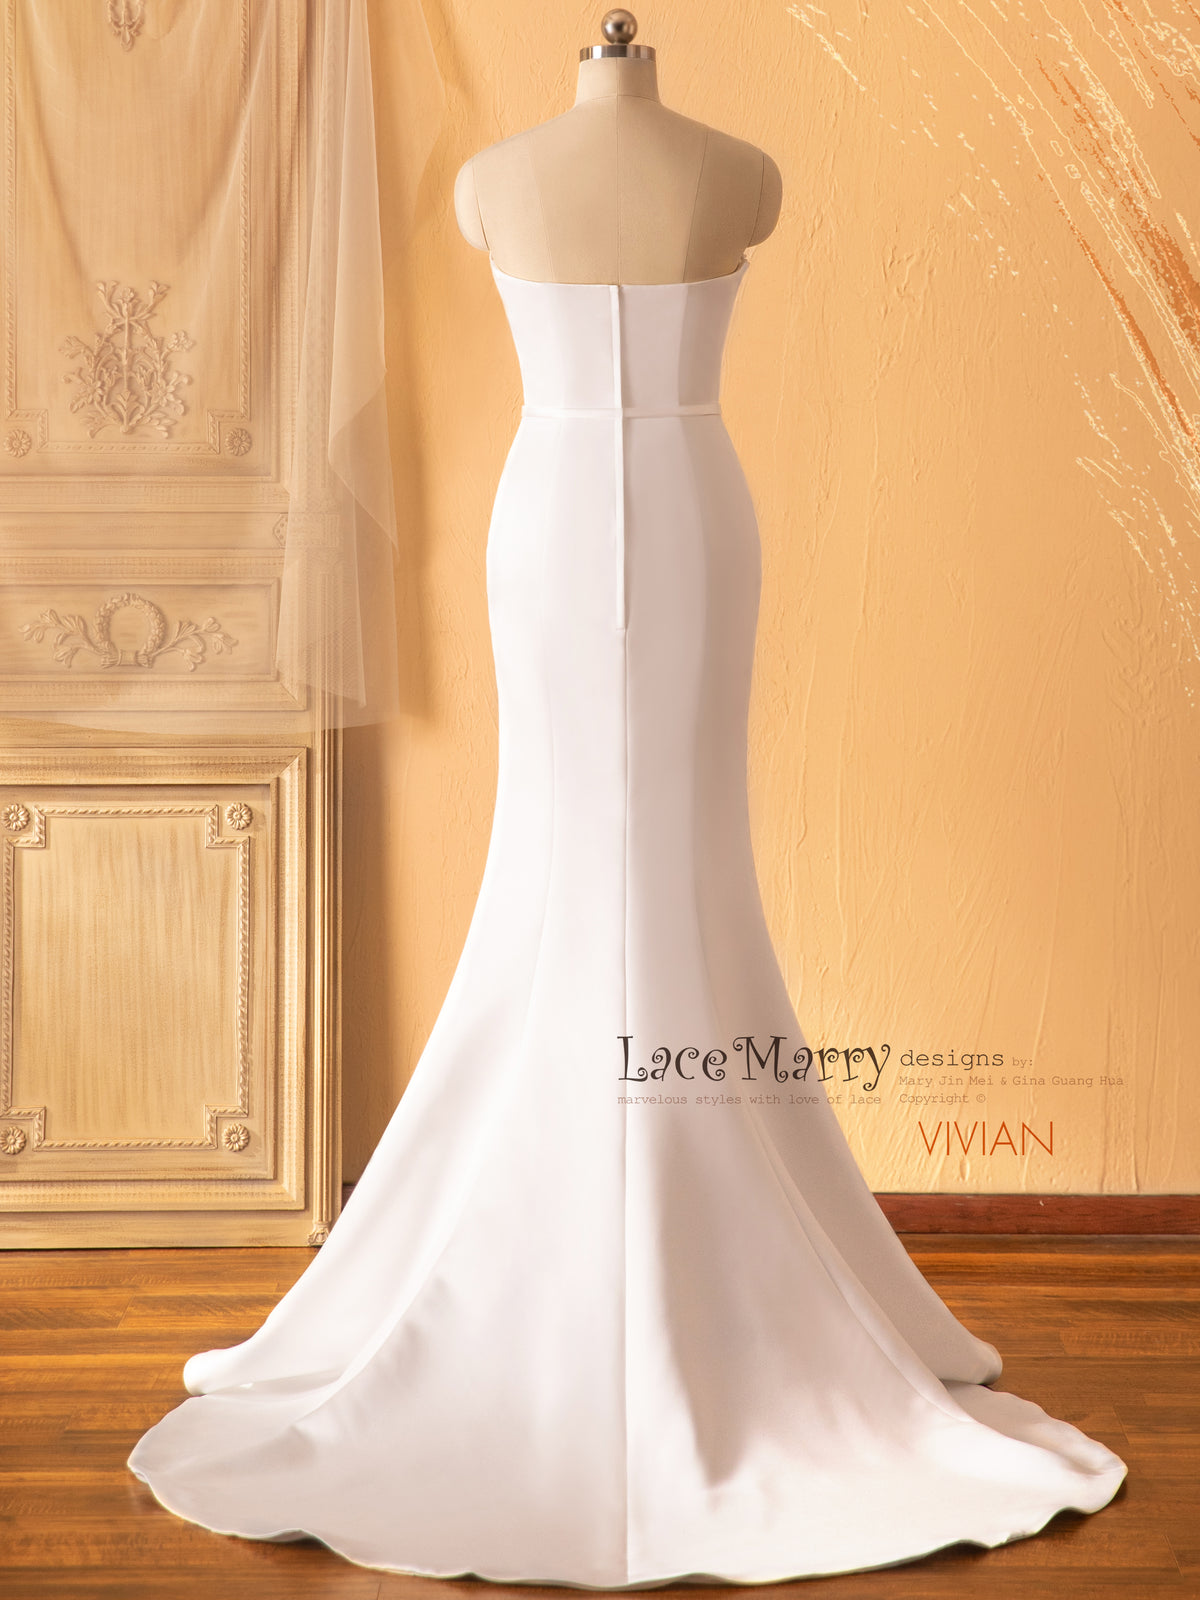 VIVIAN / Plain Wedding Dress with Folded Neckline Design